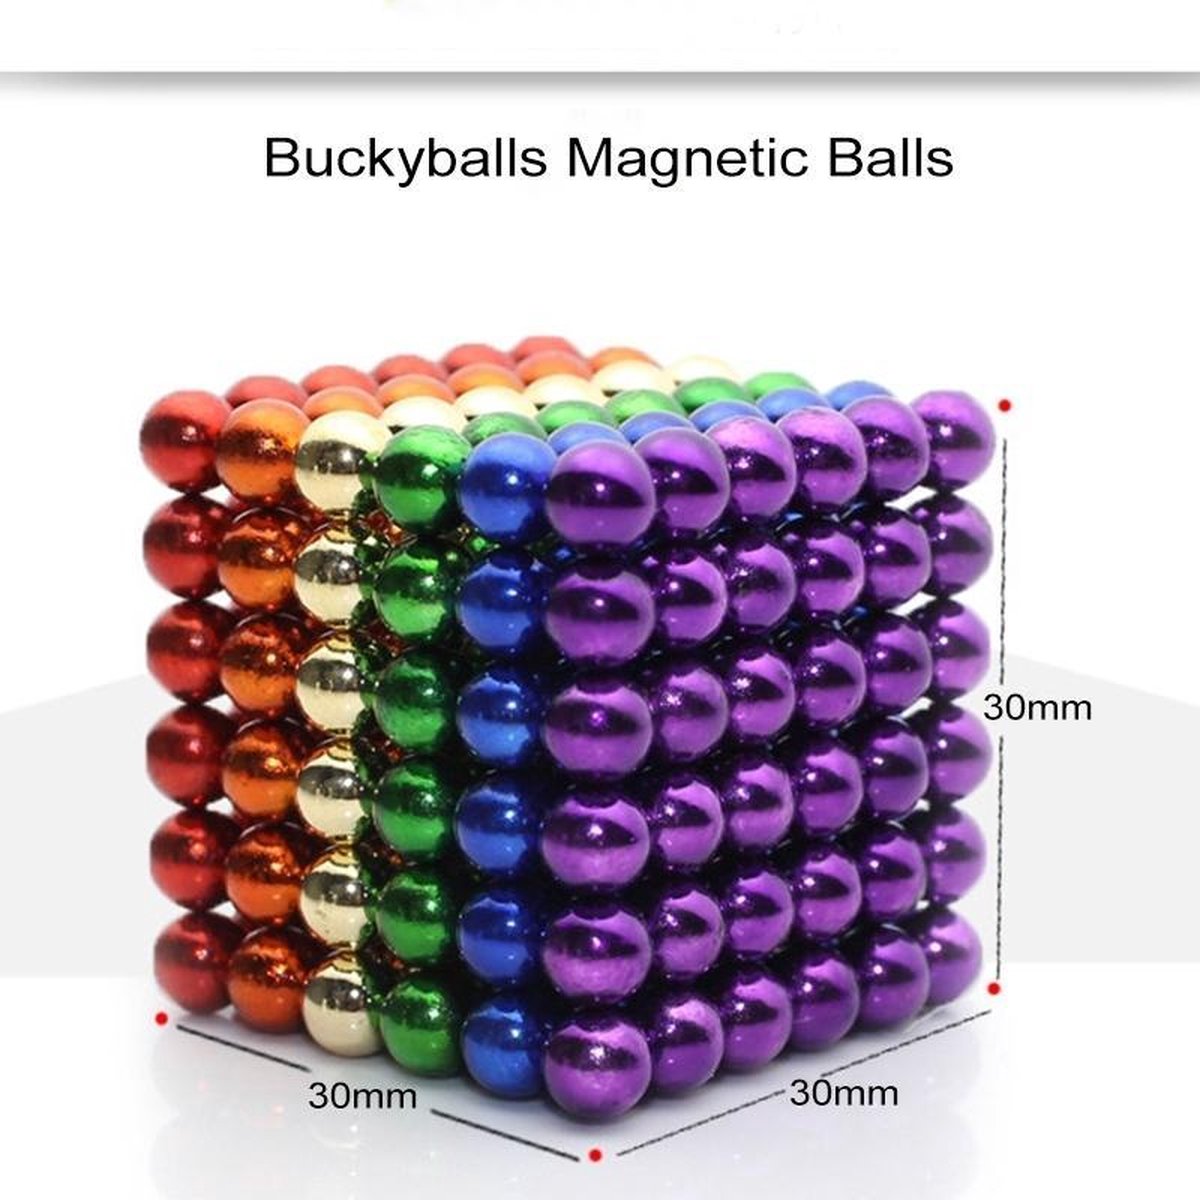 Buckyballs magnetische ballen / Magic puzzel magneet ballen (216 stuks  magneet ballen... | bol.com